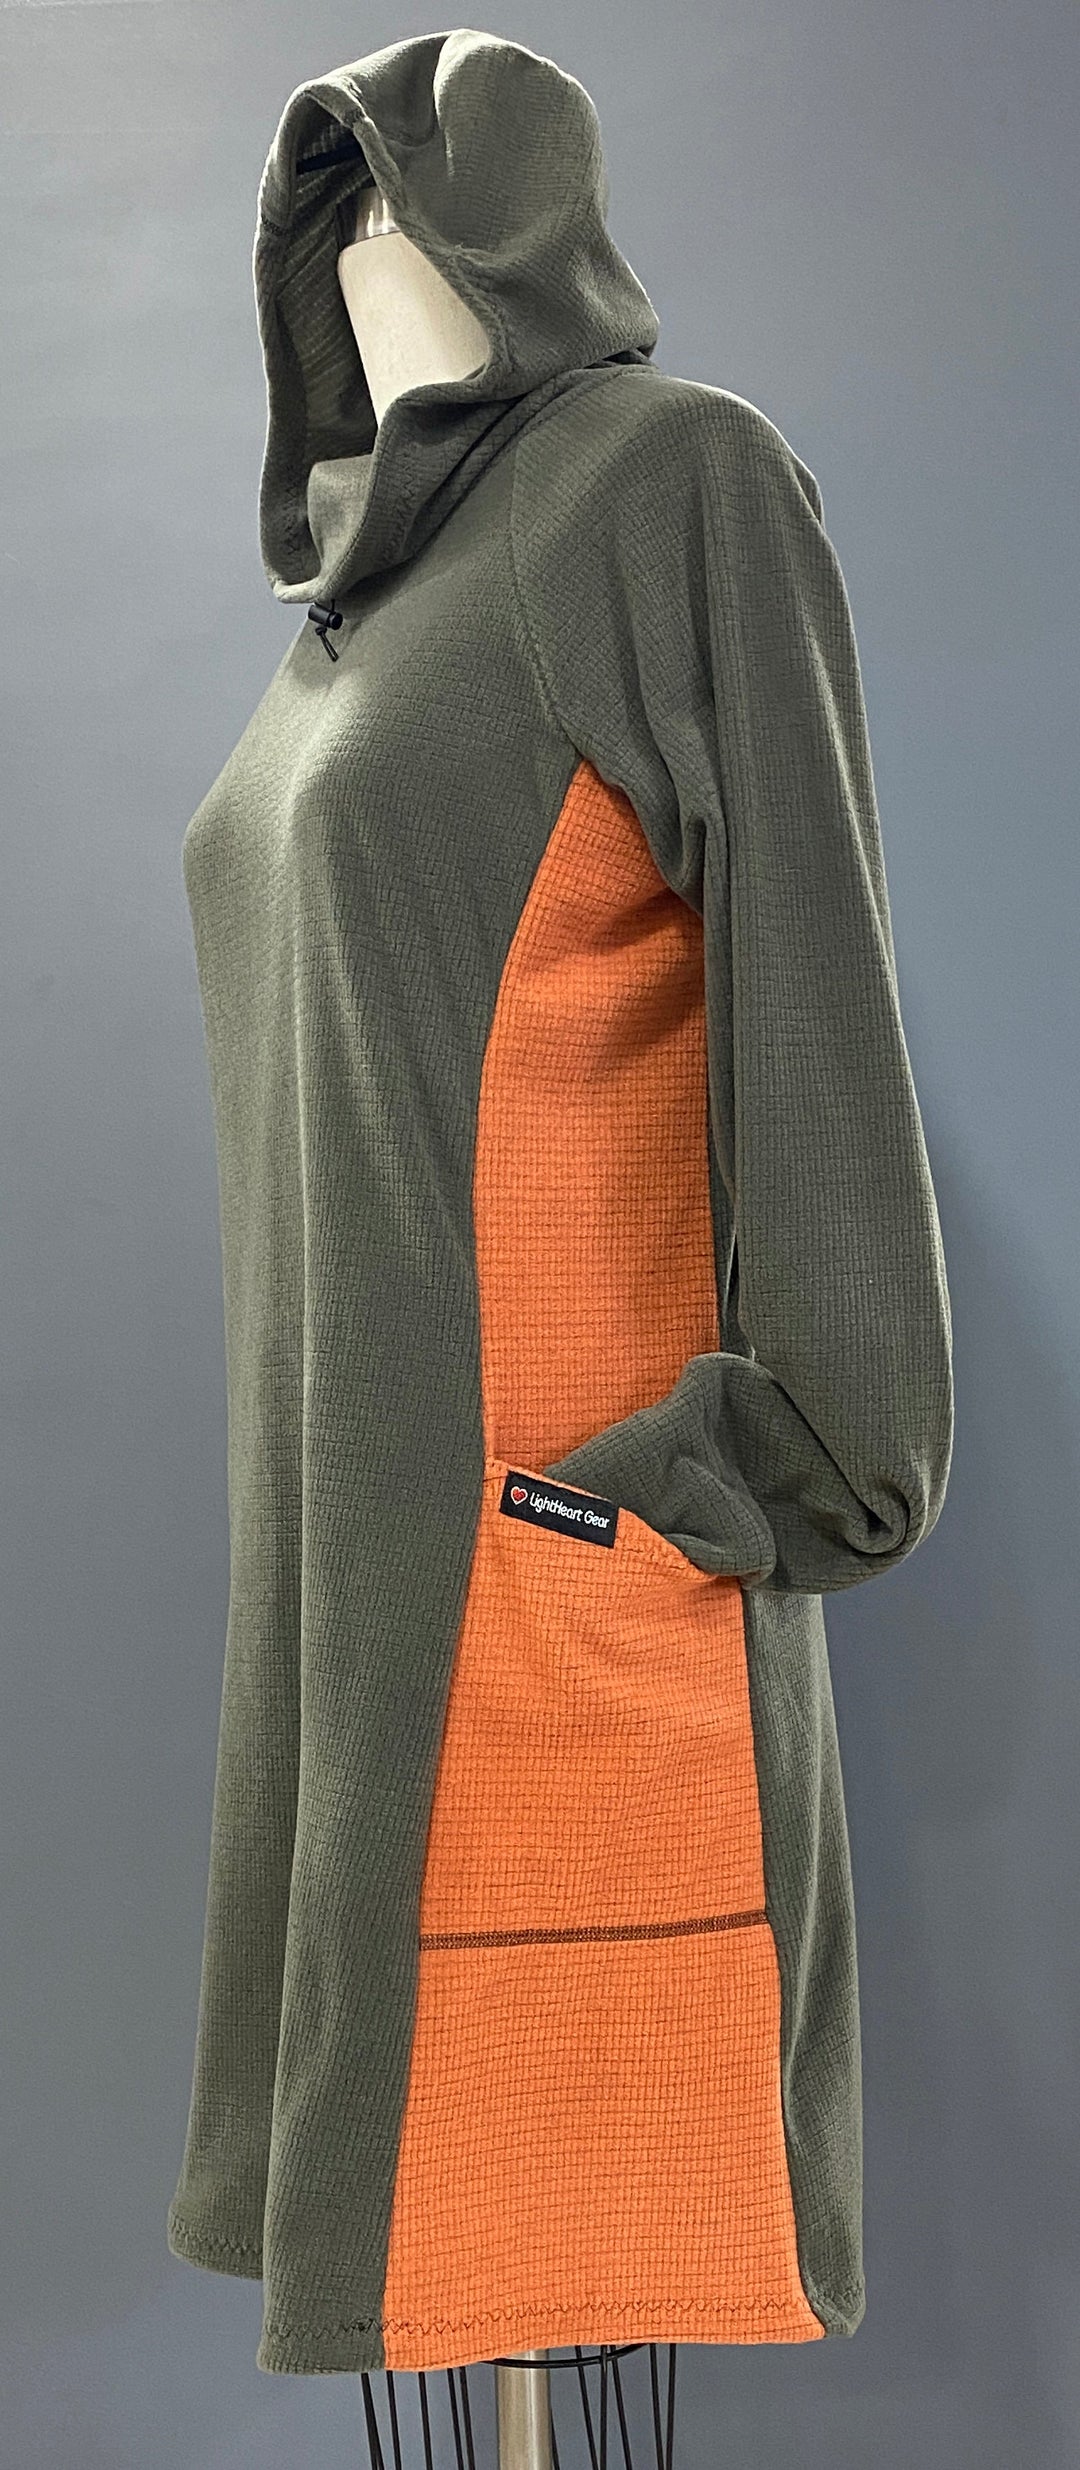 Fleece dress - Charcoal Gray w/ Burnt Orange